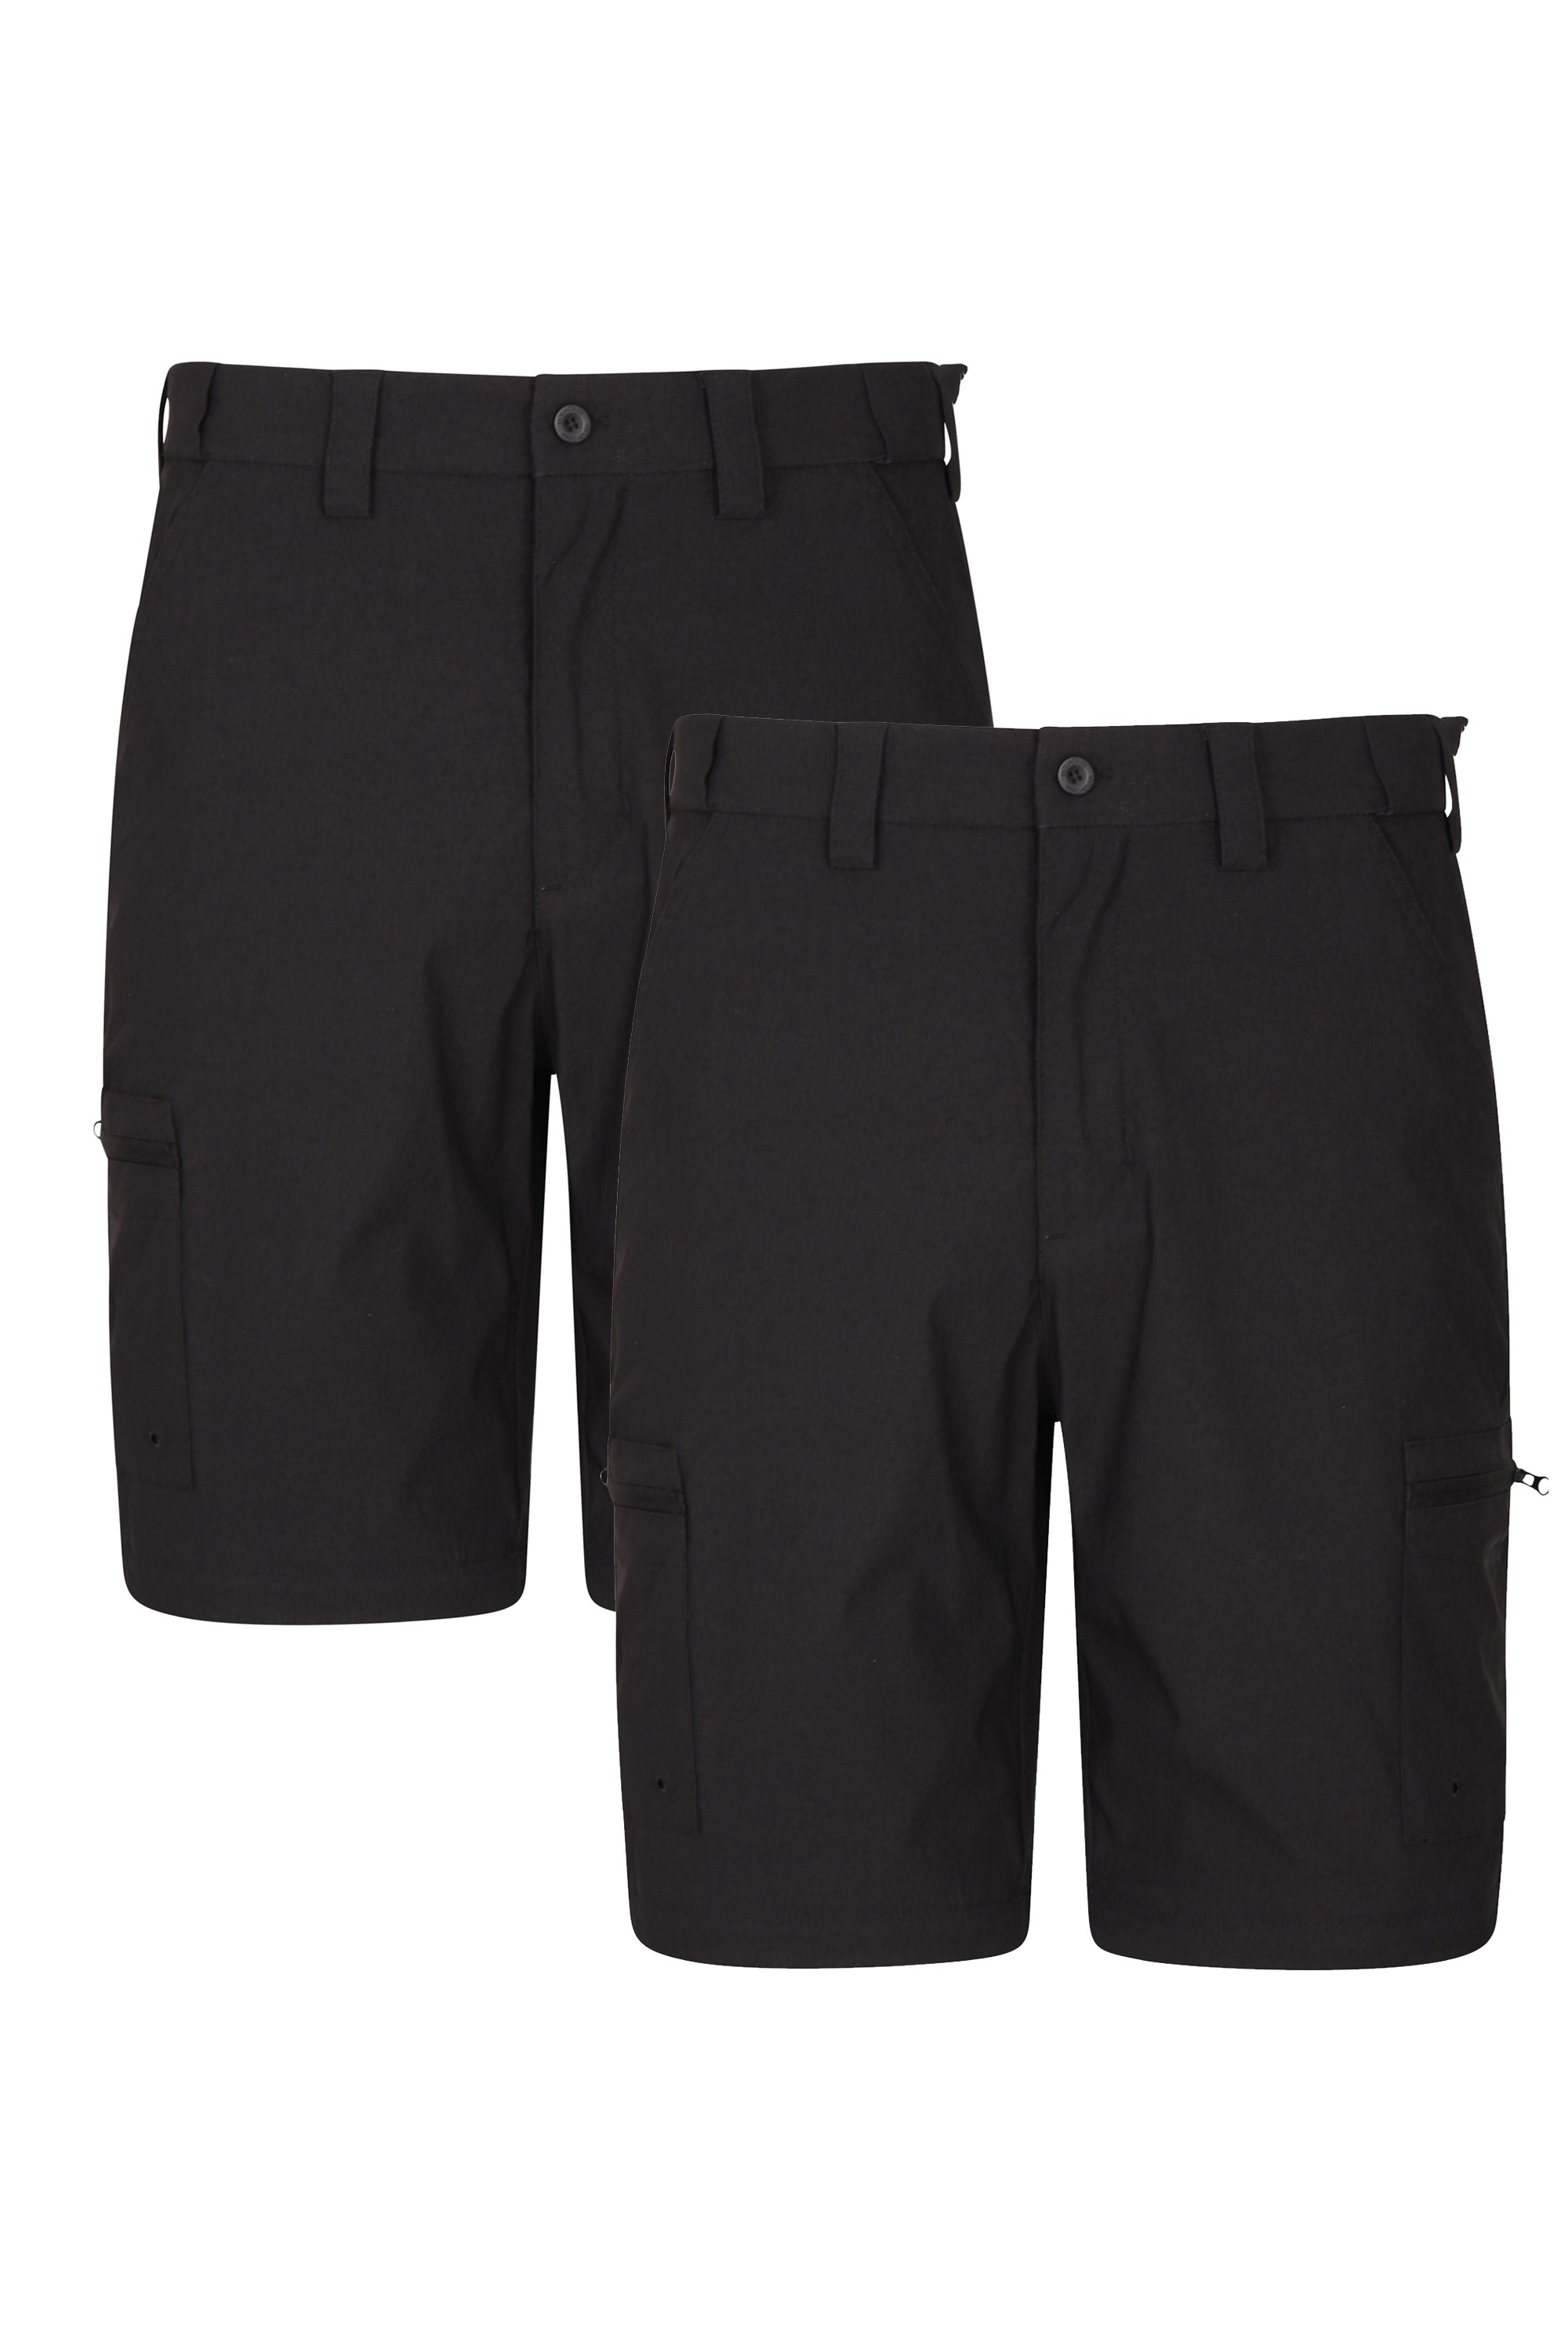 Trek Mens Stretch Shorts Multipack - Black